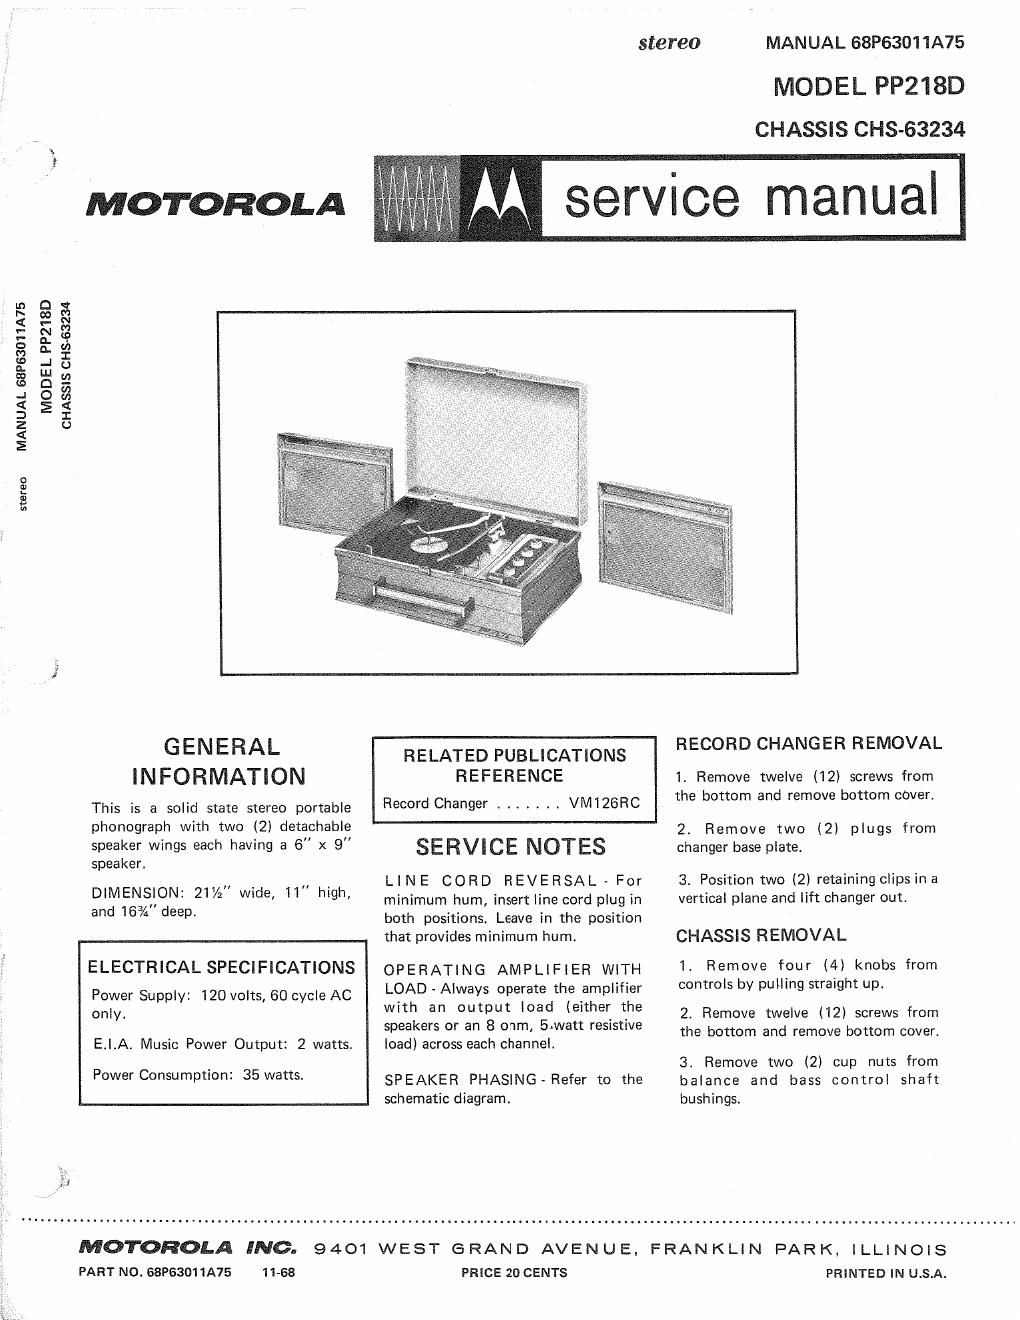 motorola pp 218 d service manual